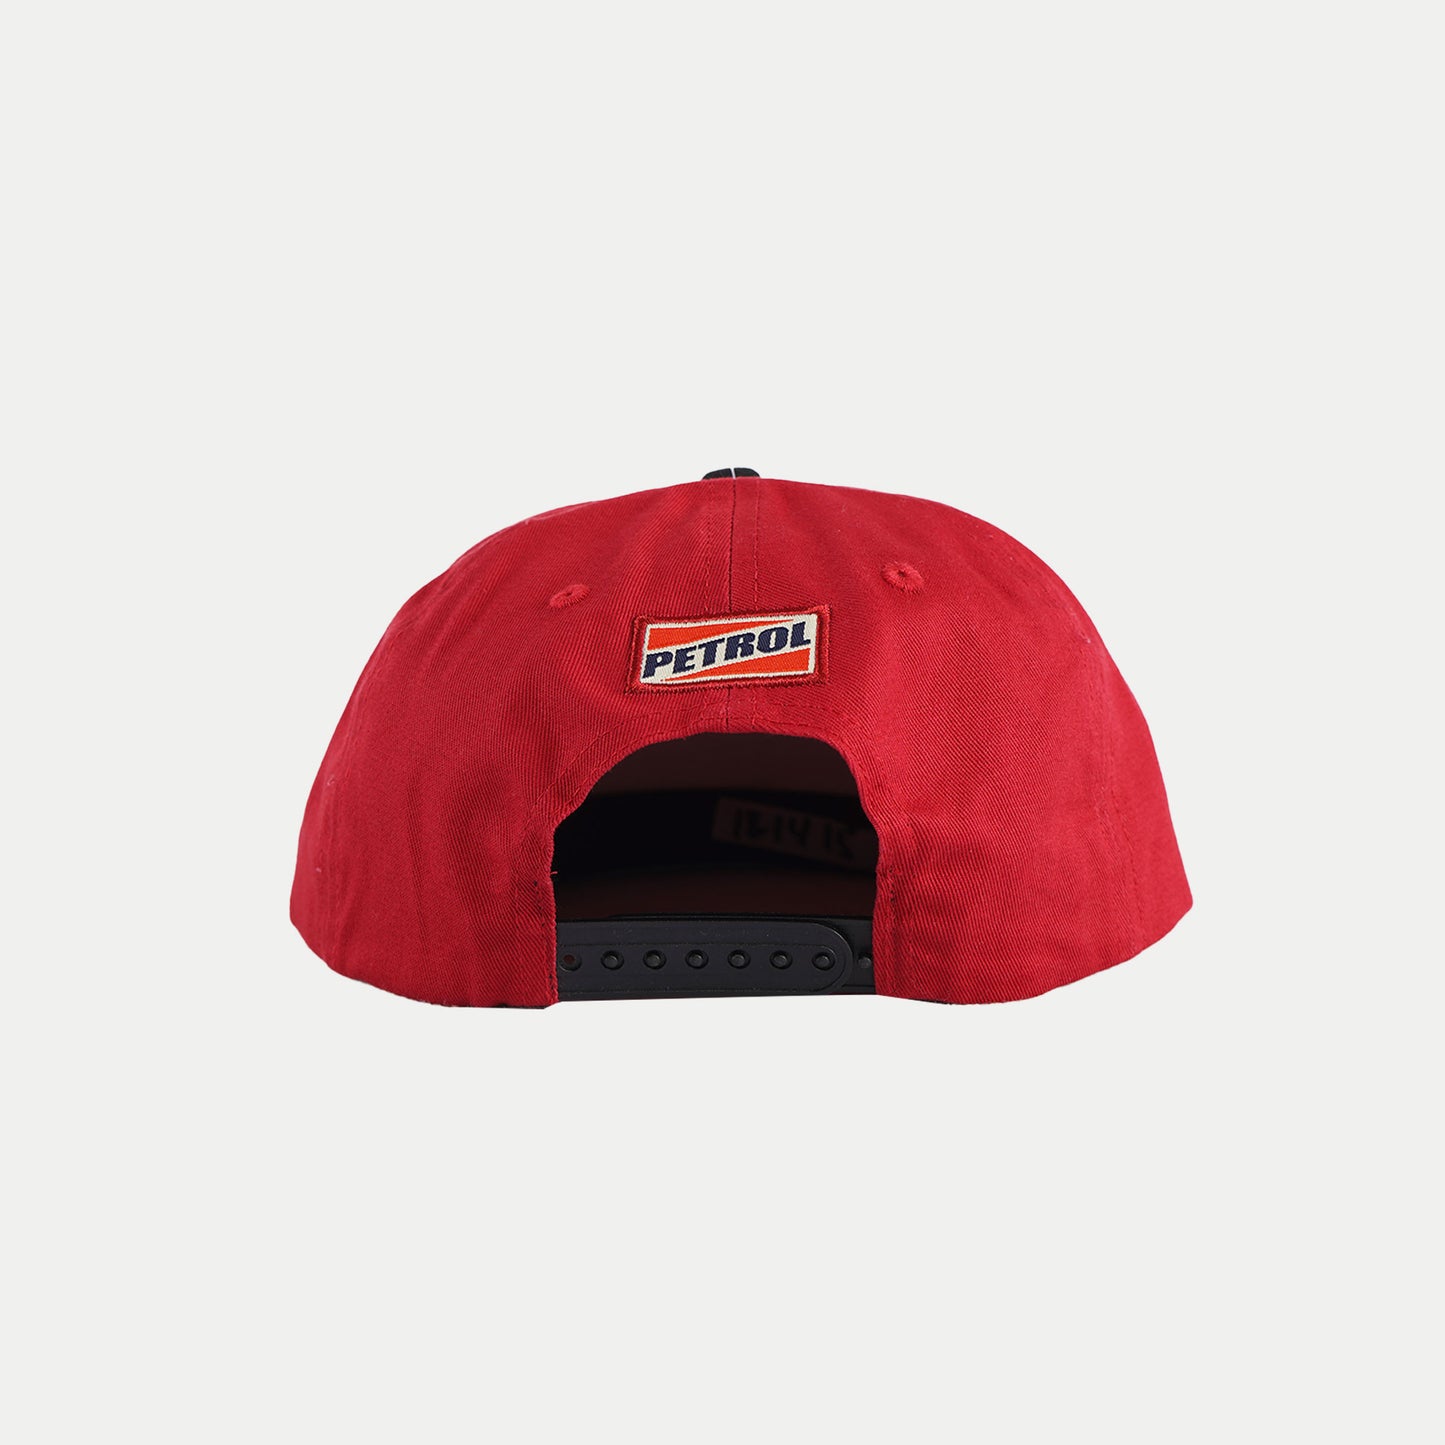 Petrol Men's Accessories Basic Cap for Men Snapback Cap Trendy fashion Black Snapback Cap for Men 121412 (Red)